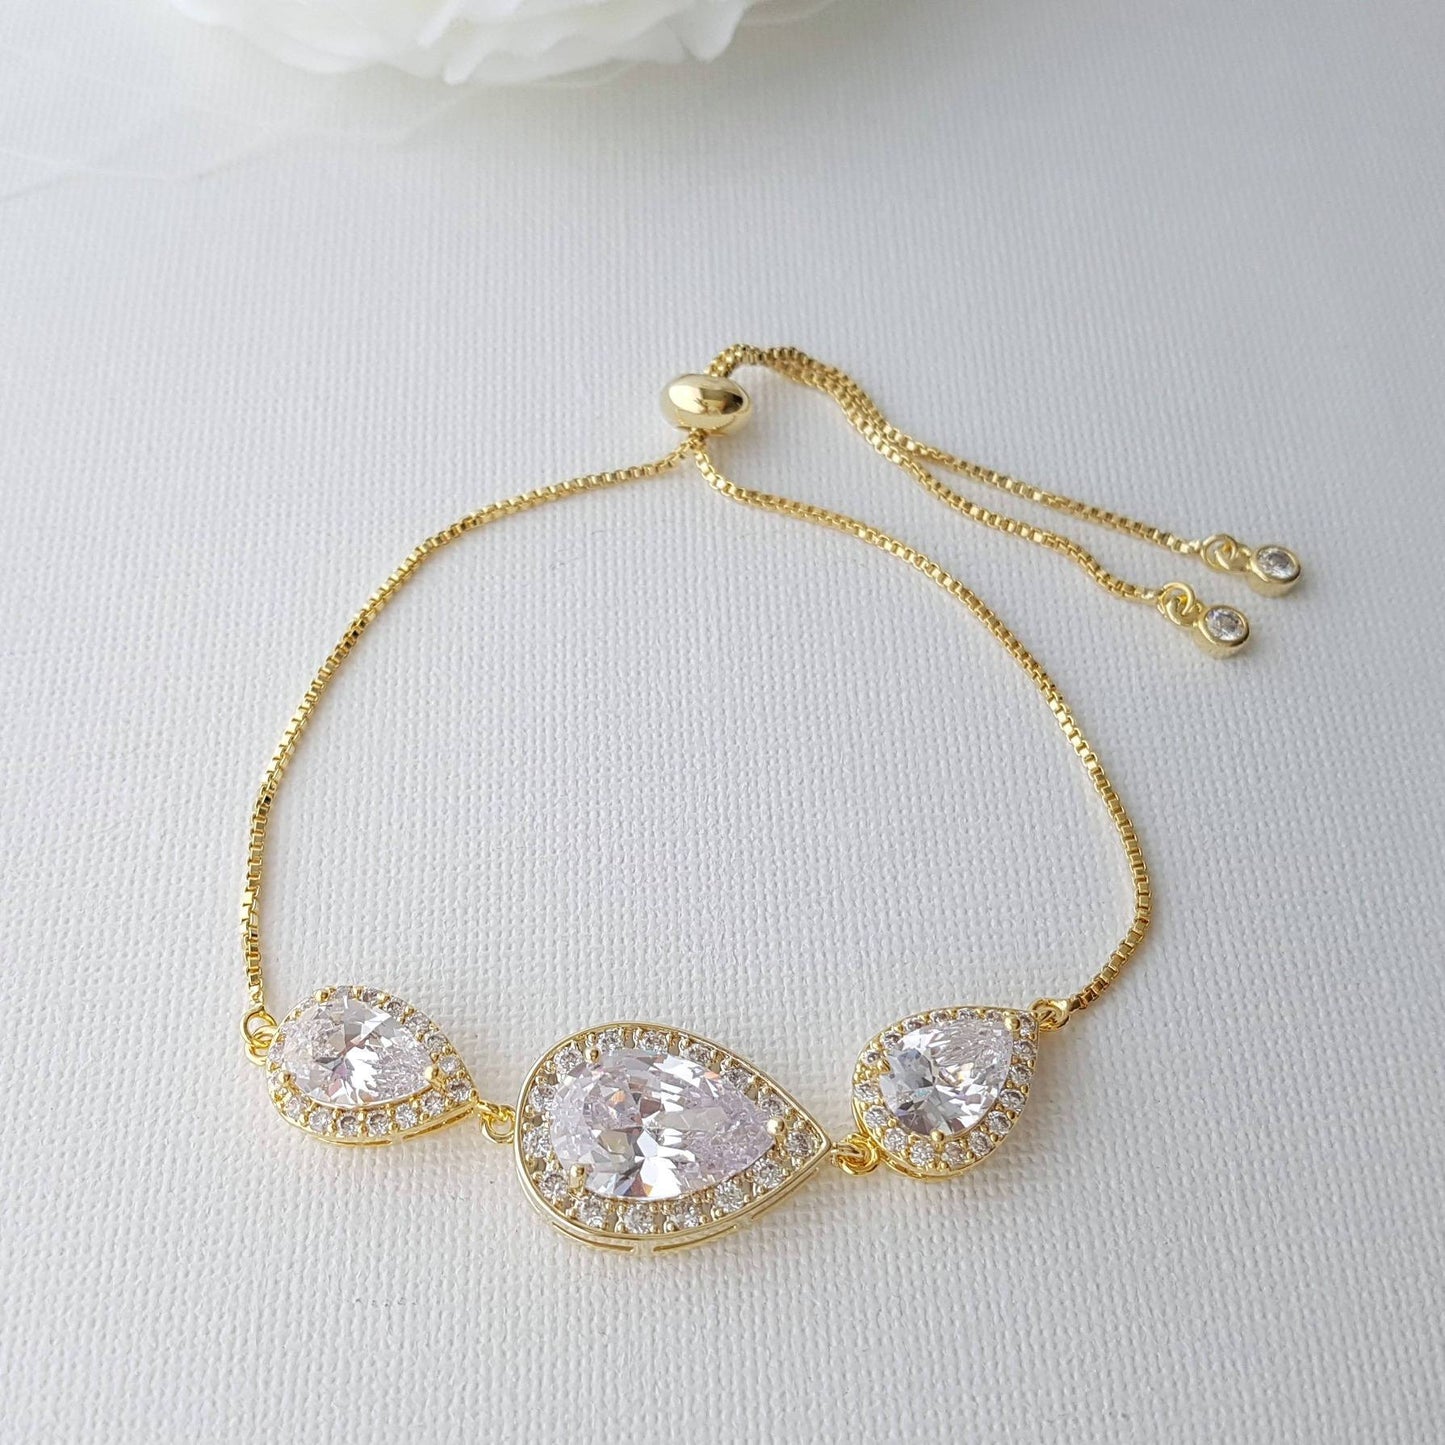 Gold Bridal Bracelet, Gold Wedding Jewelry, Gold Crystal Bracelet, Clear Cubic Zirconia, Gold Teardrop Bracelet, Bridesmaid Bracelet, Evelyn - PoetryDesigns